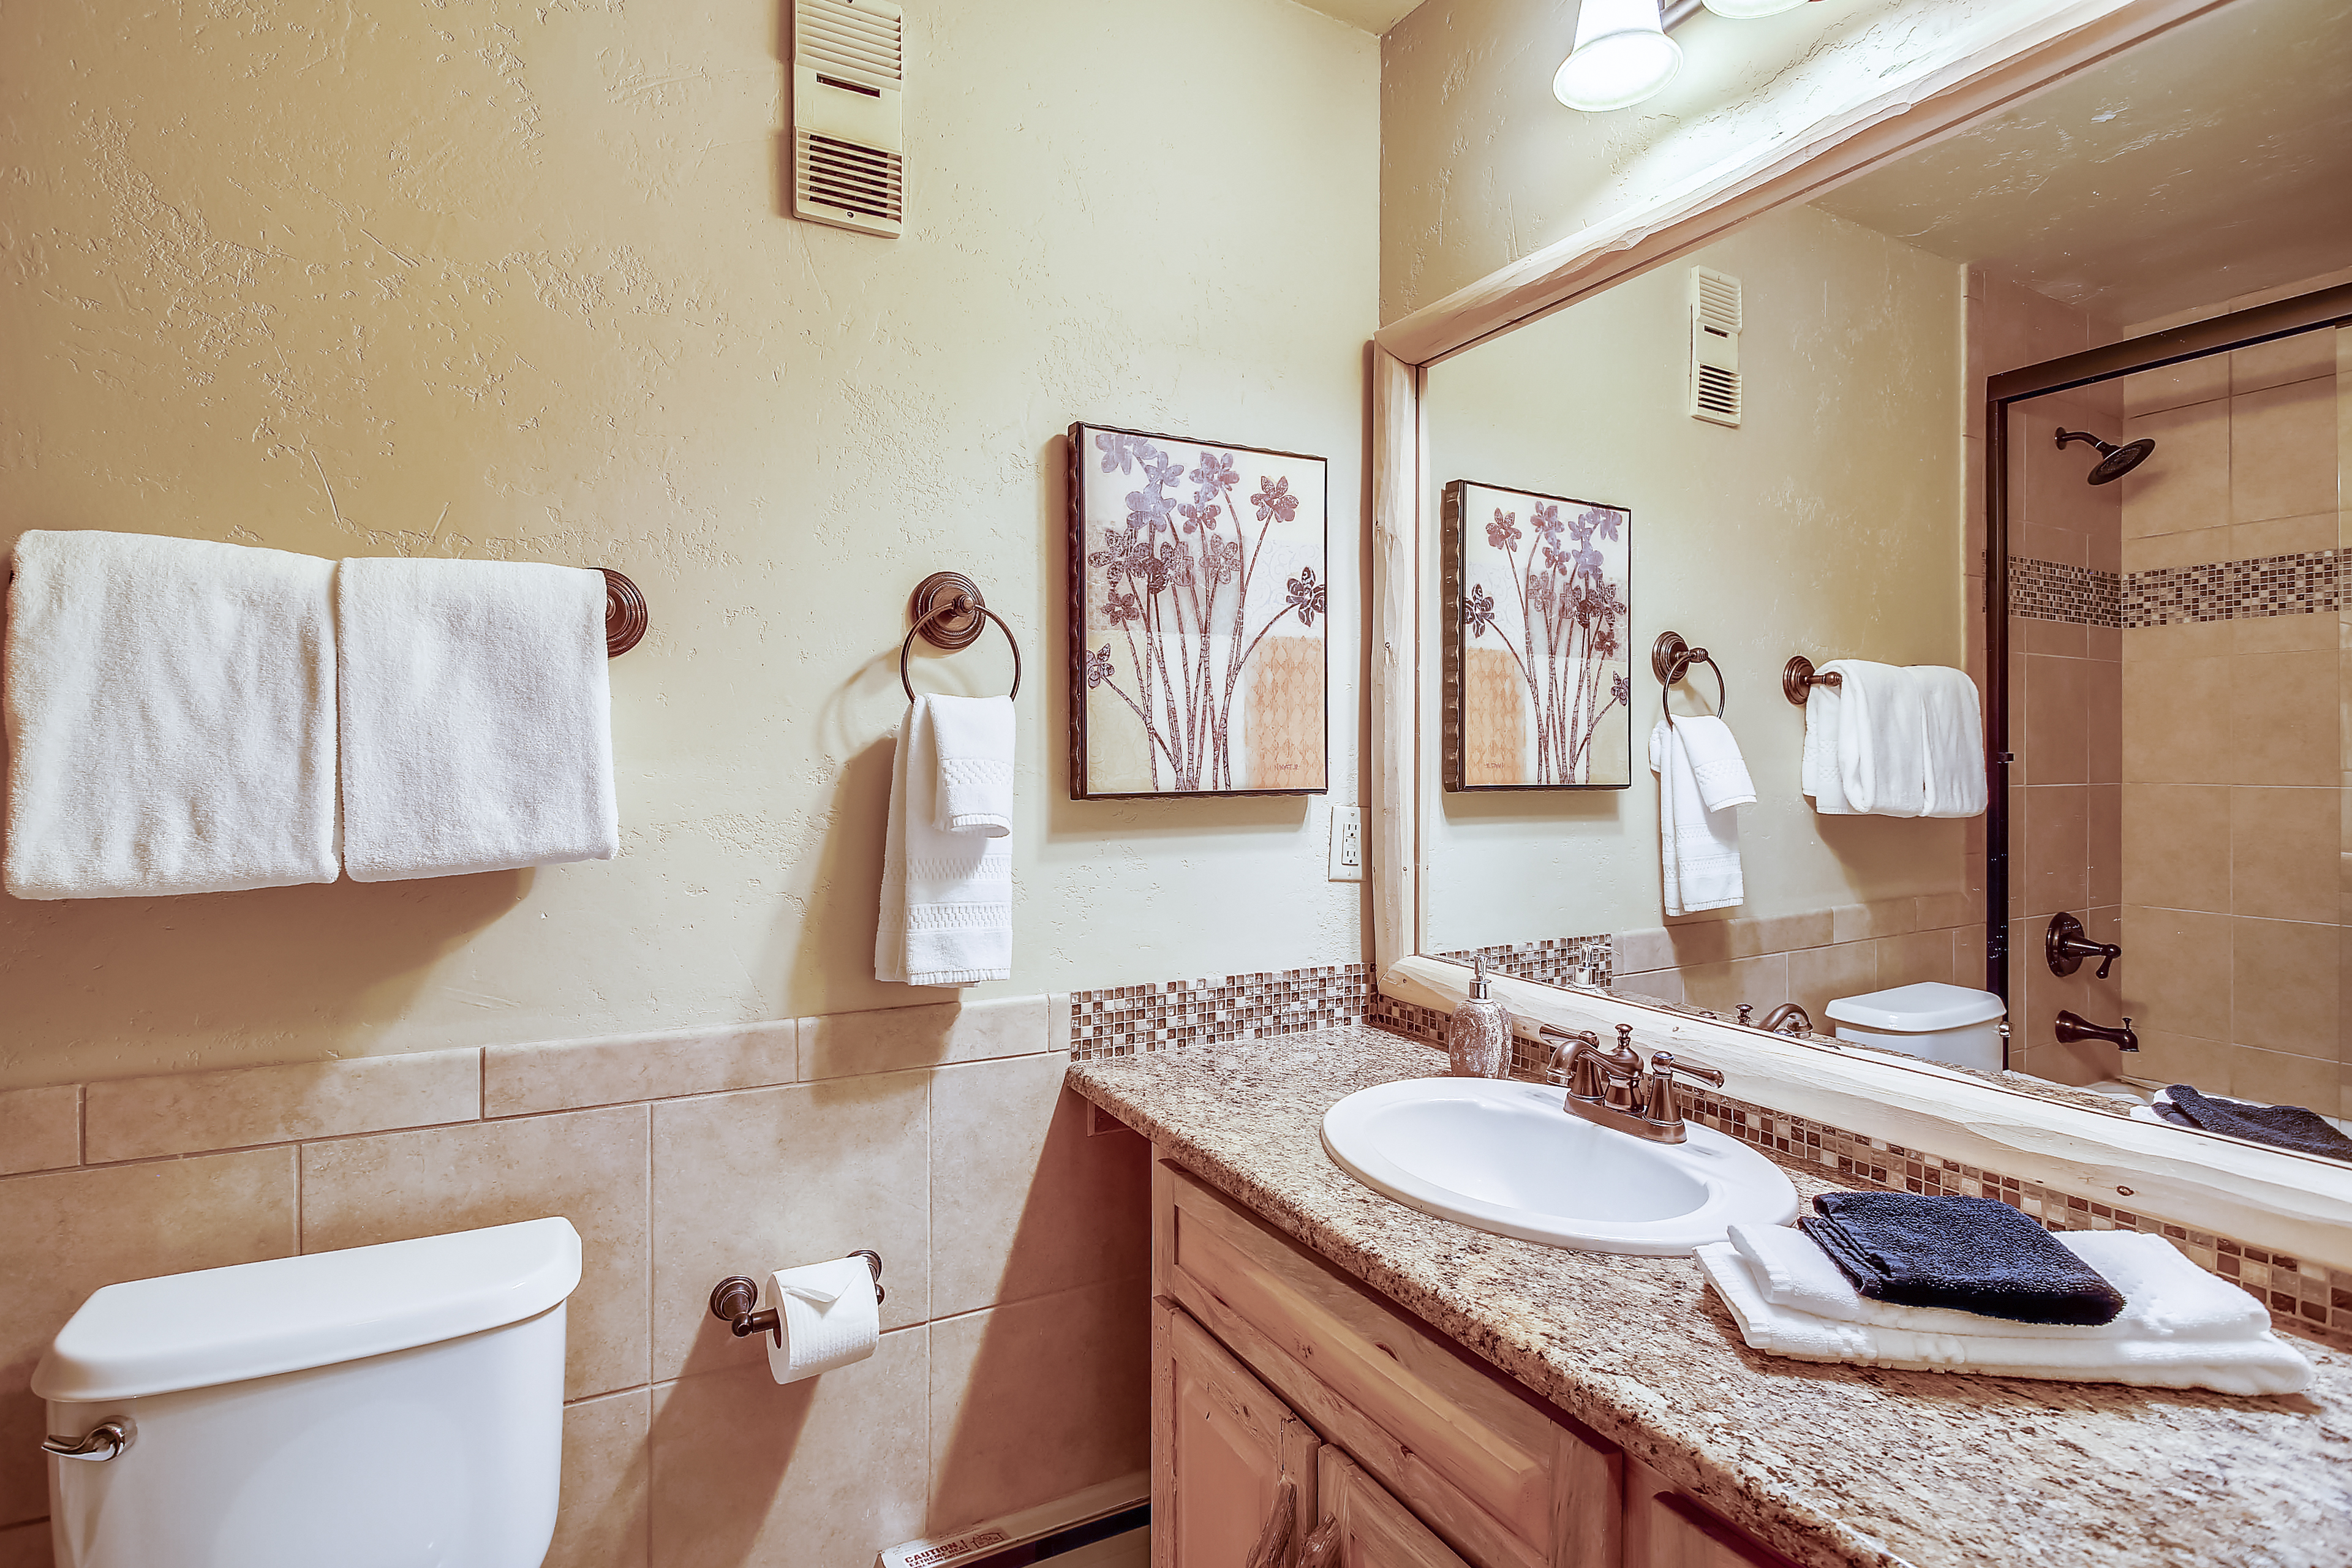 Shared bathroom for queen bedroom and bunk bedroom - Cedars 53 Breckenridge Vacation Rental